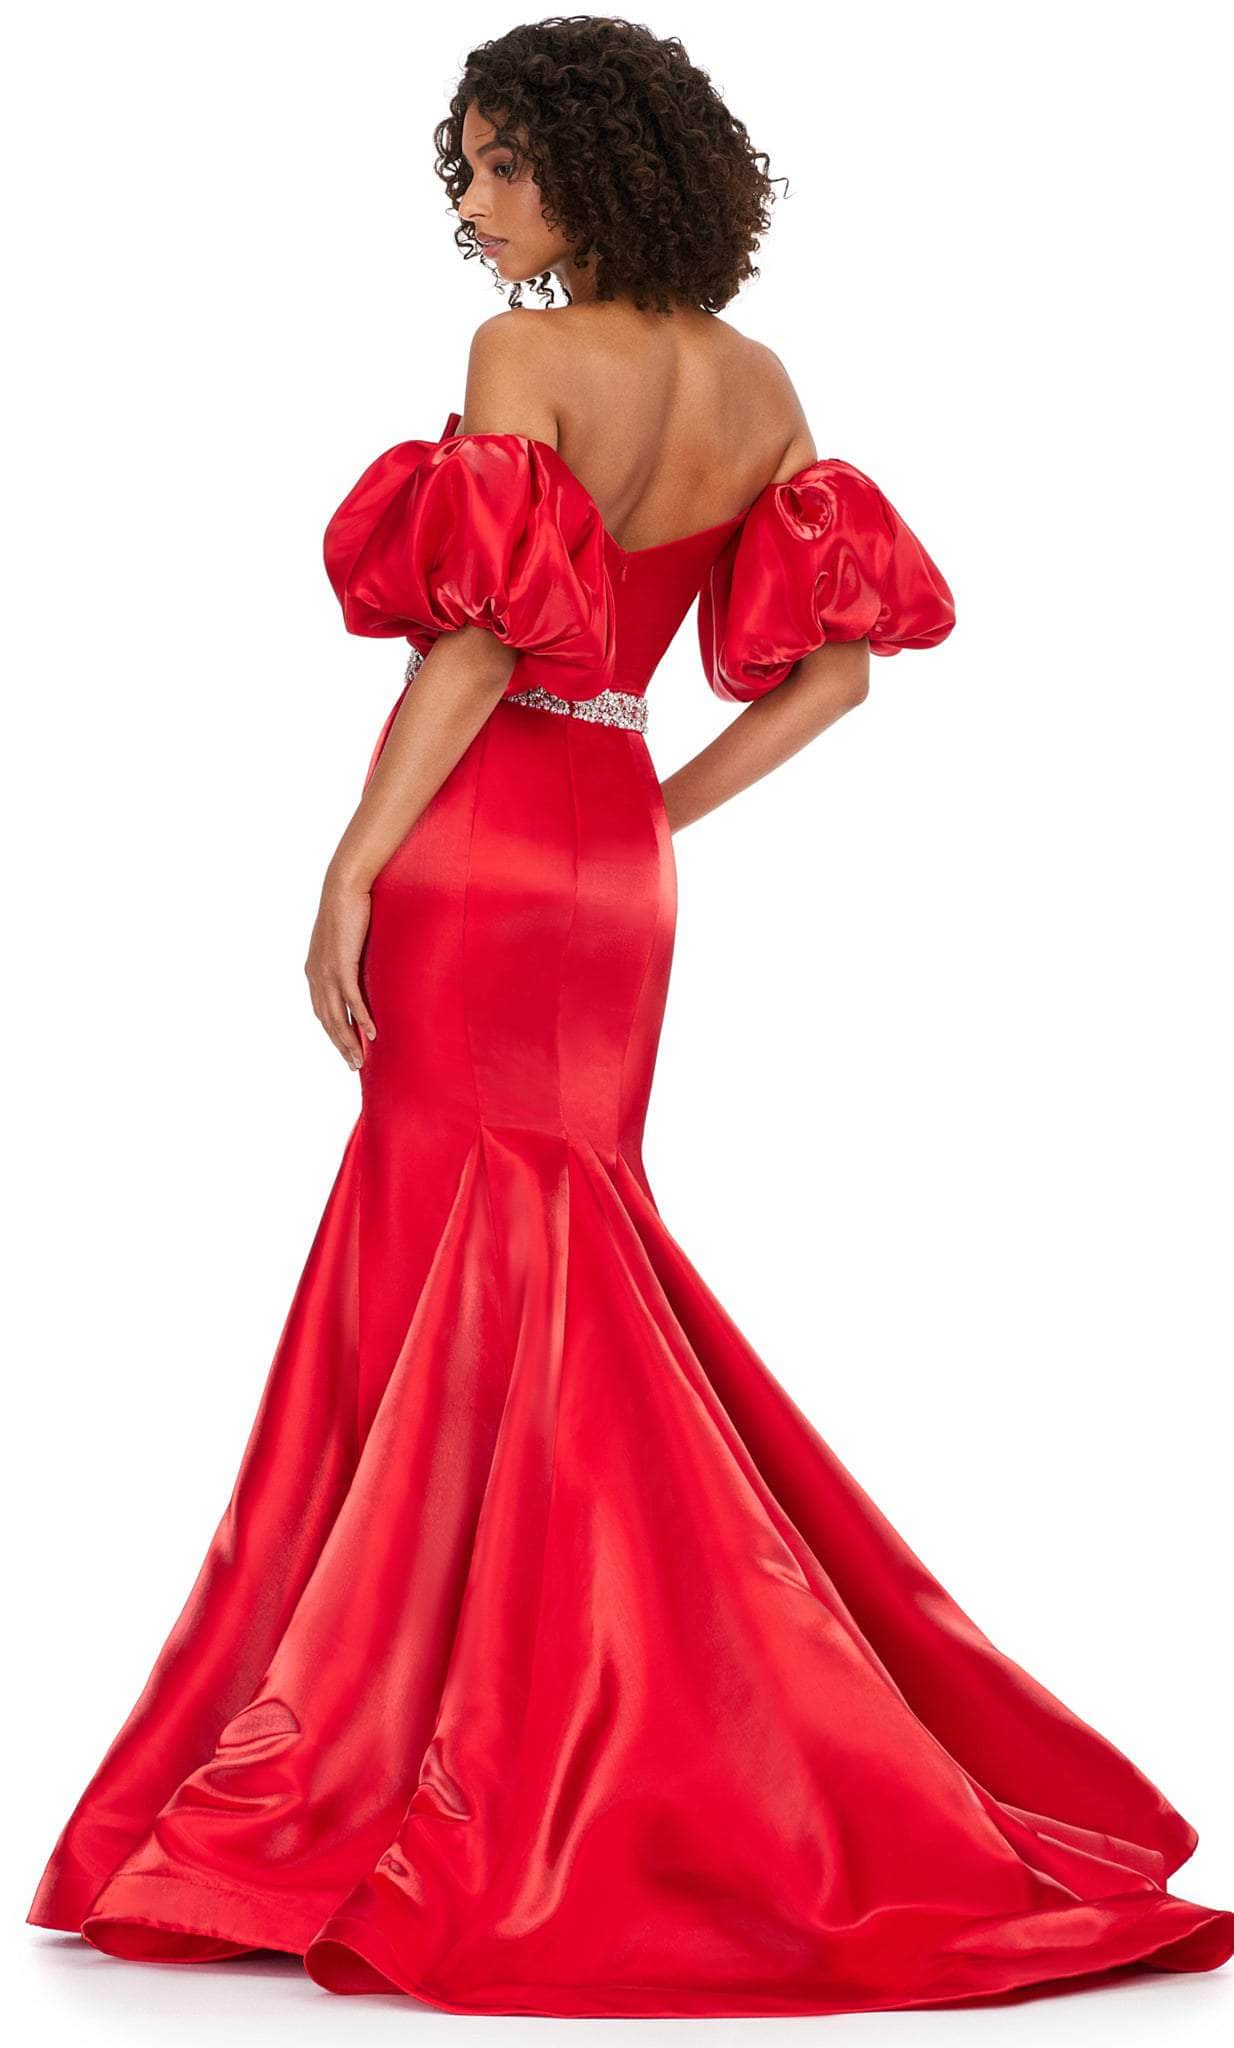 ashley lauren 11419 - mermaid gown